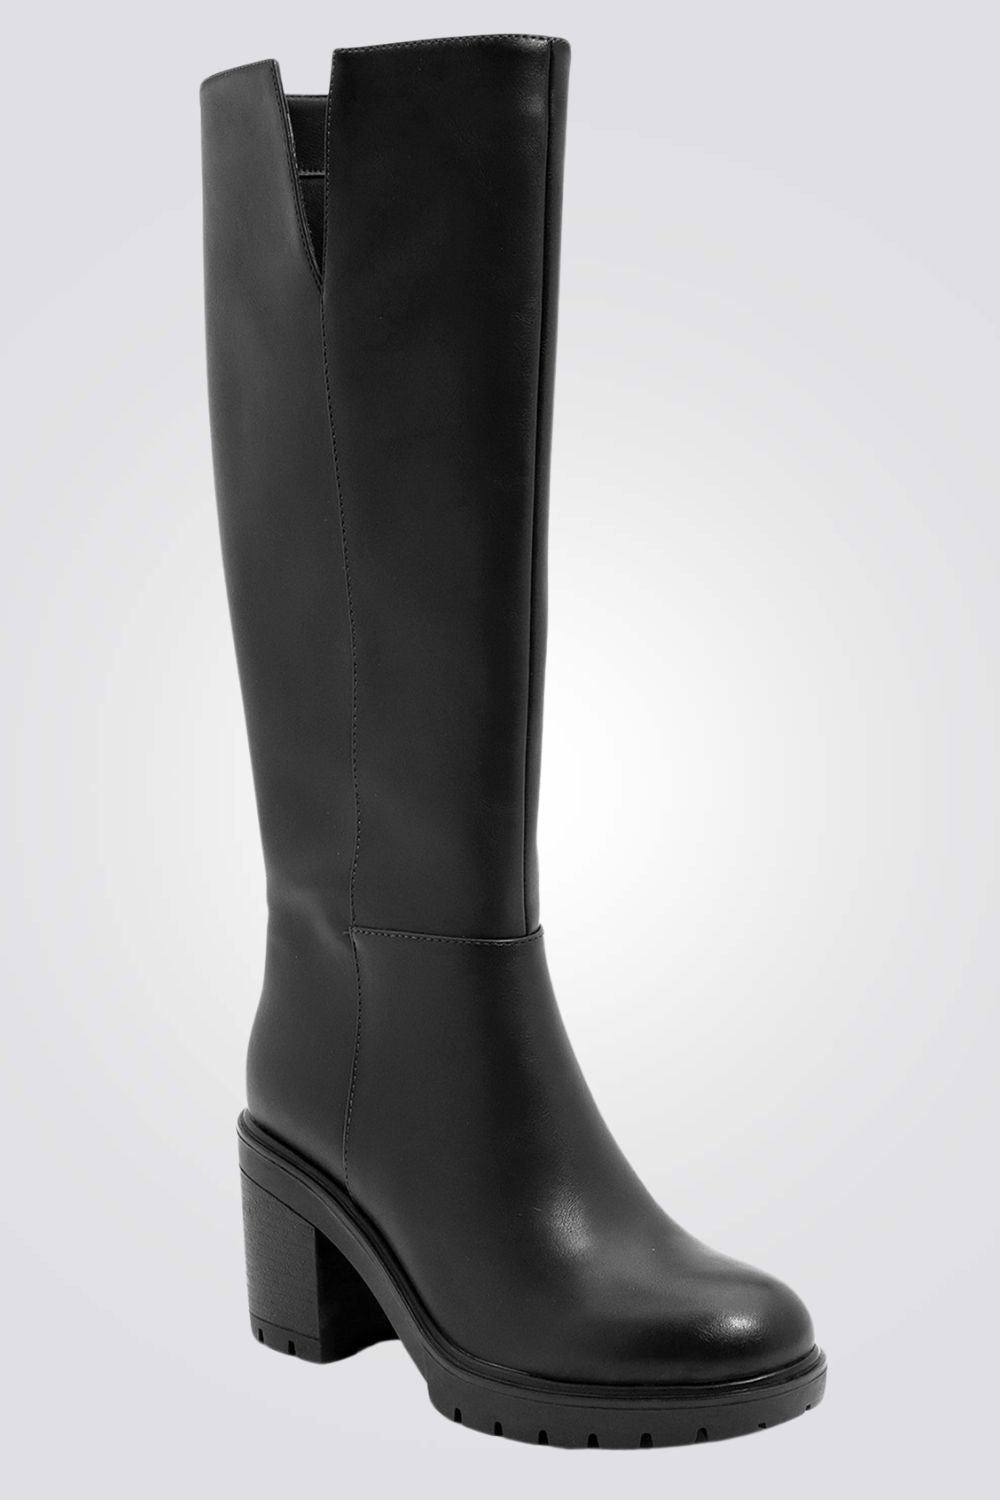 SEVENTYNINE - מגפיים גבוהות לידס לנשים בצבע שחור - MASHBIR//365